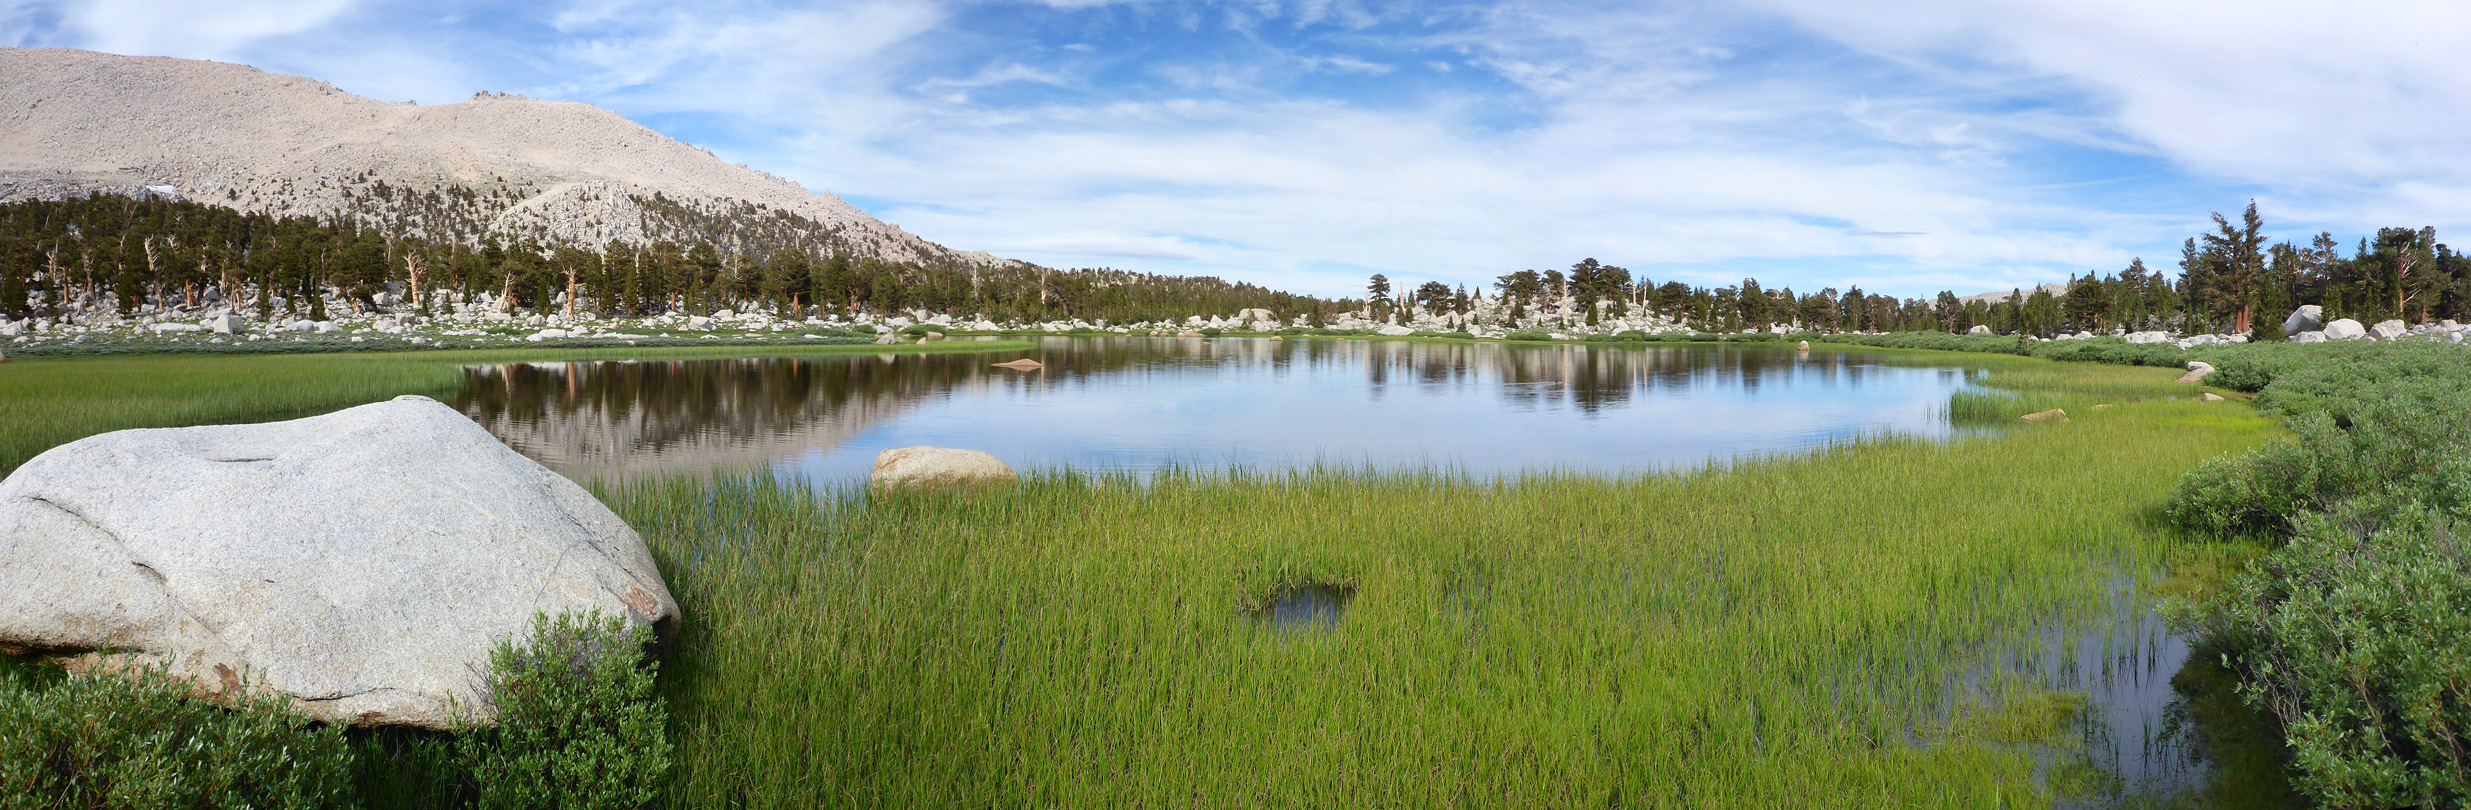 Grass-lined pond